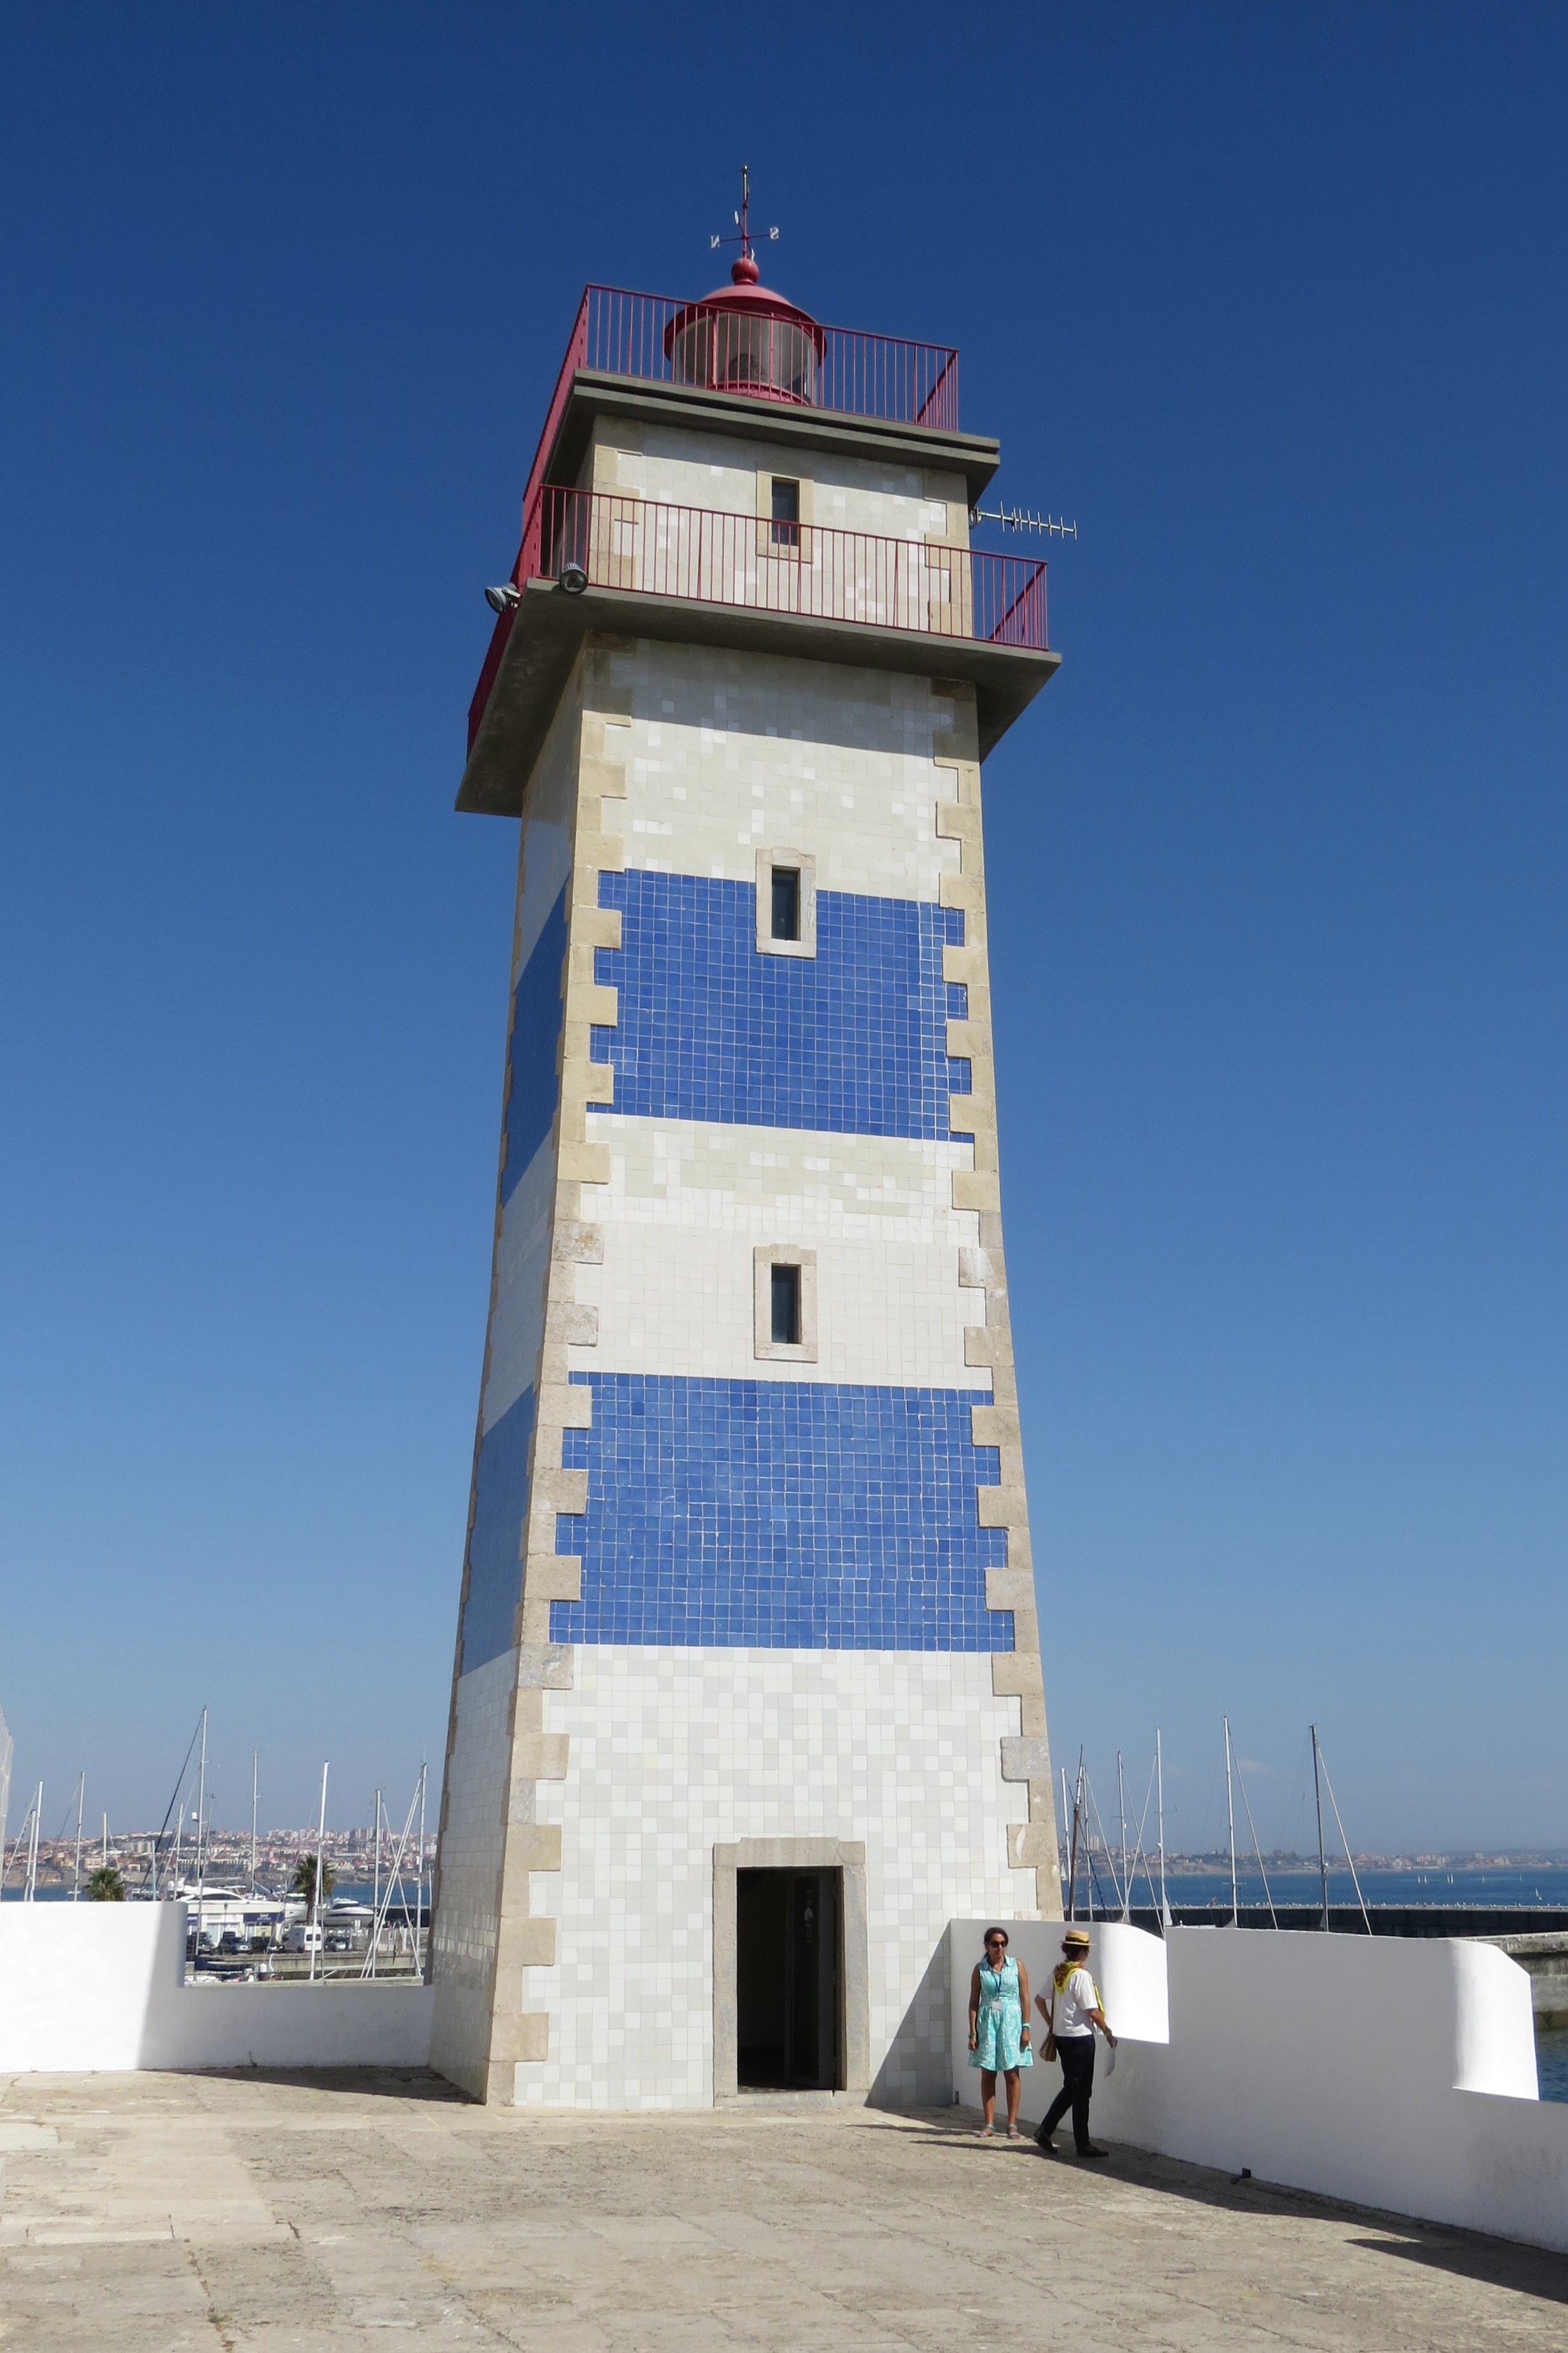 Santa Marta lighthouse
Source of the photo: [url=http://faroisbrasileiros.com.br/]Farois Brasileiros[/url]
Keywords: Brazil;Atlantic ocean